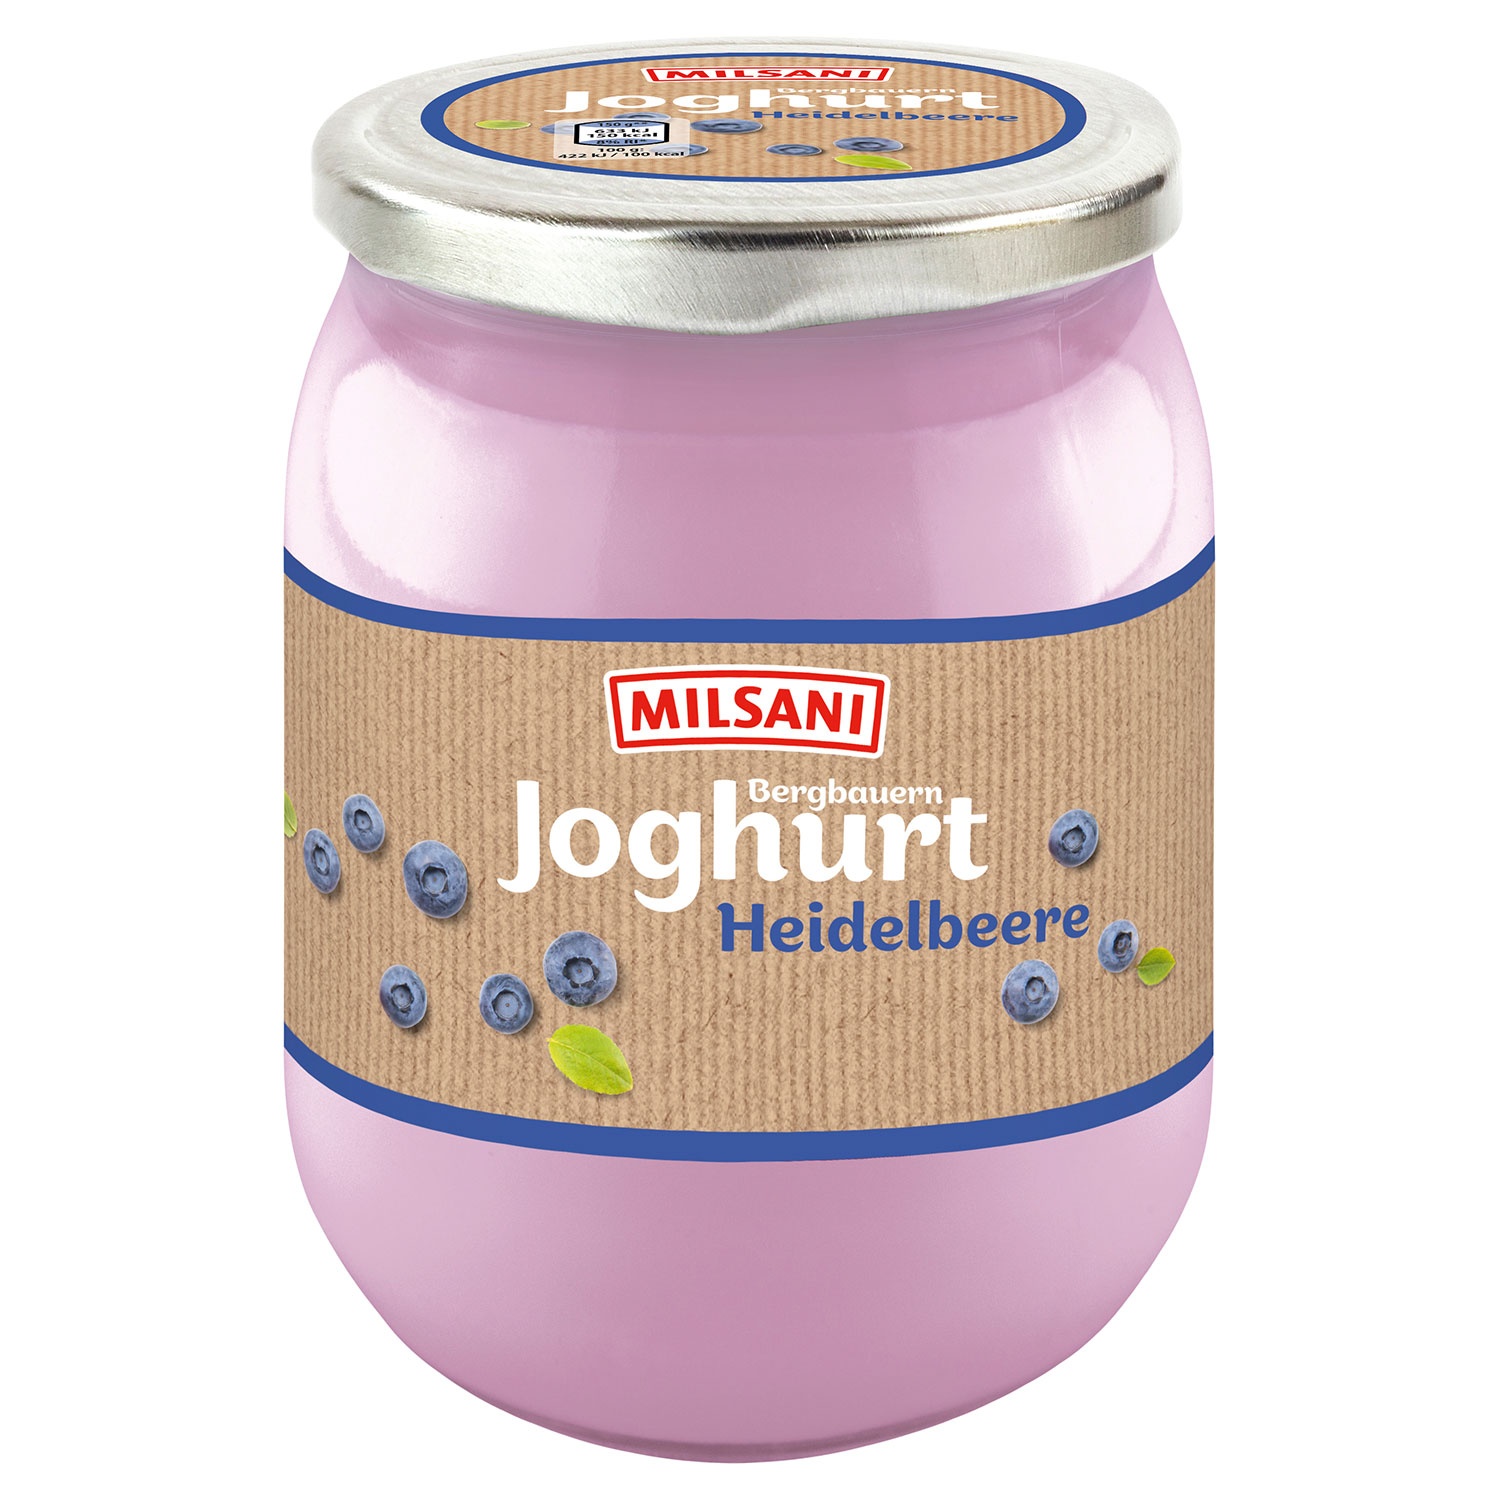 MILSANI Bergbauern-Joghurt 0,45 kg, Heidelbeere